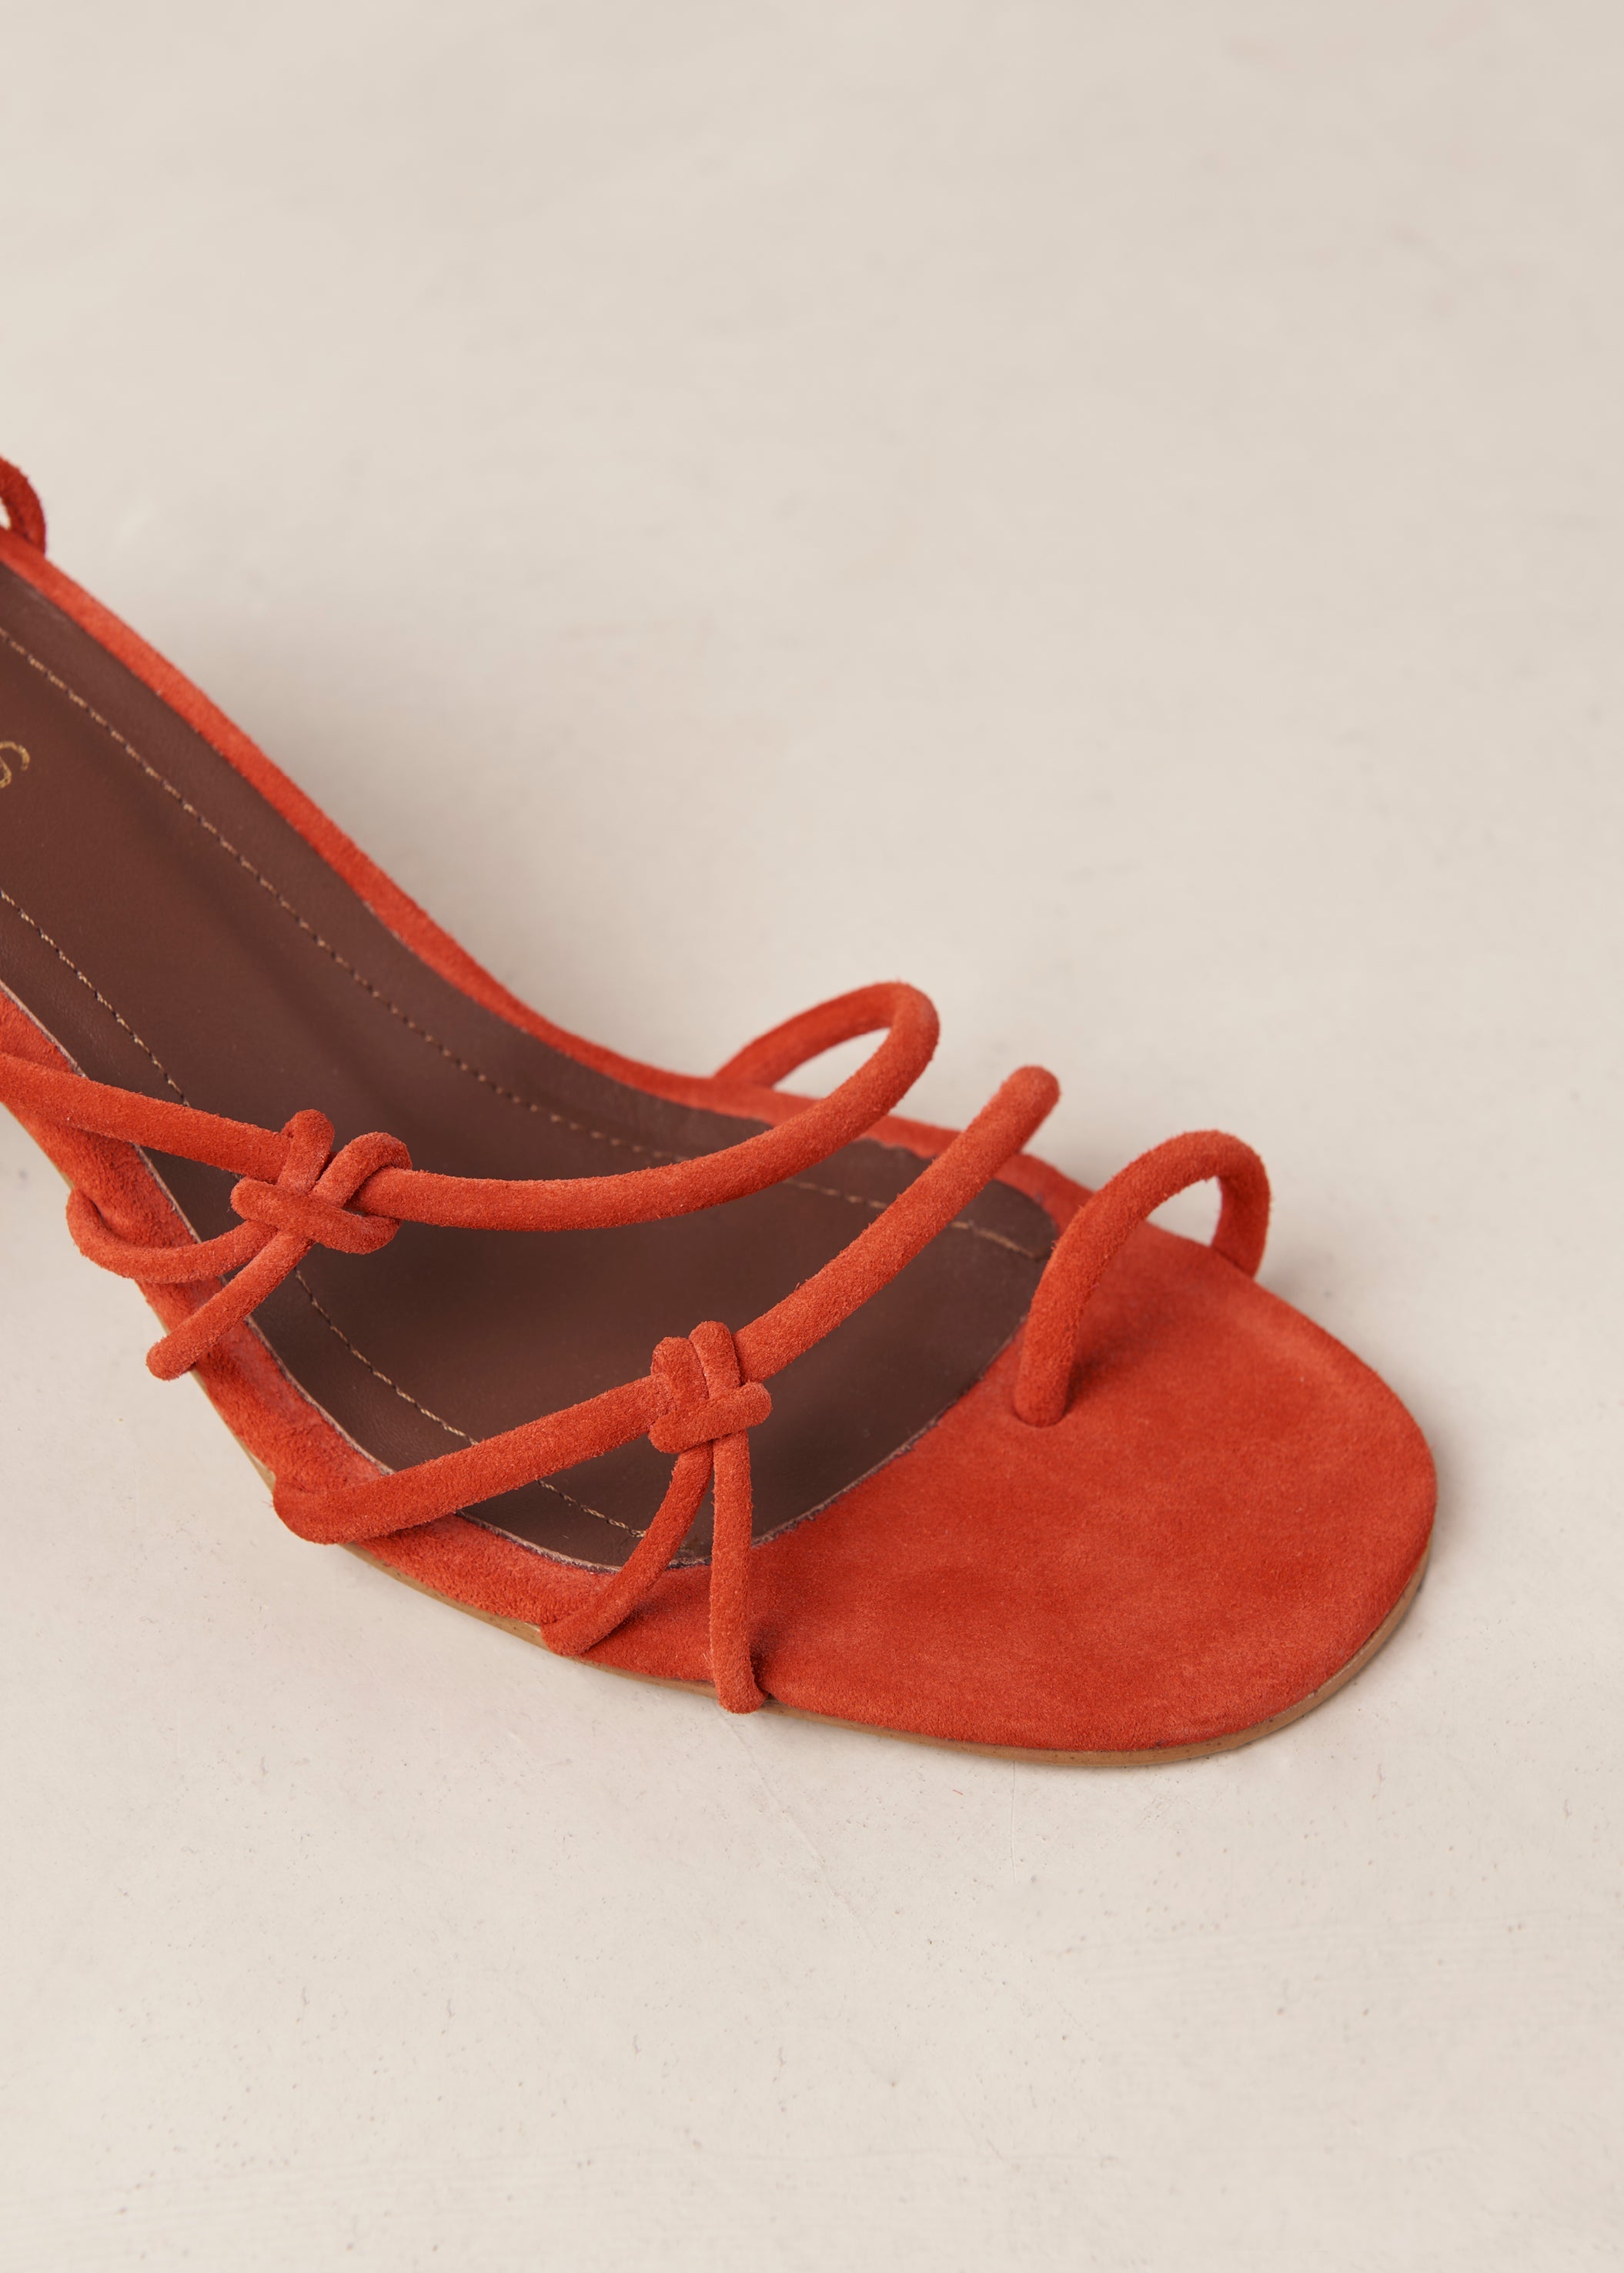 Goldie Pomelo Orange Leather Sandals